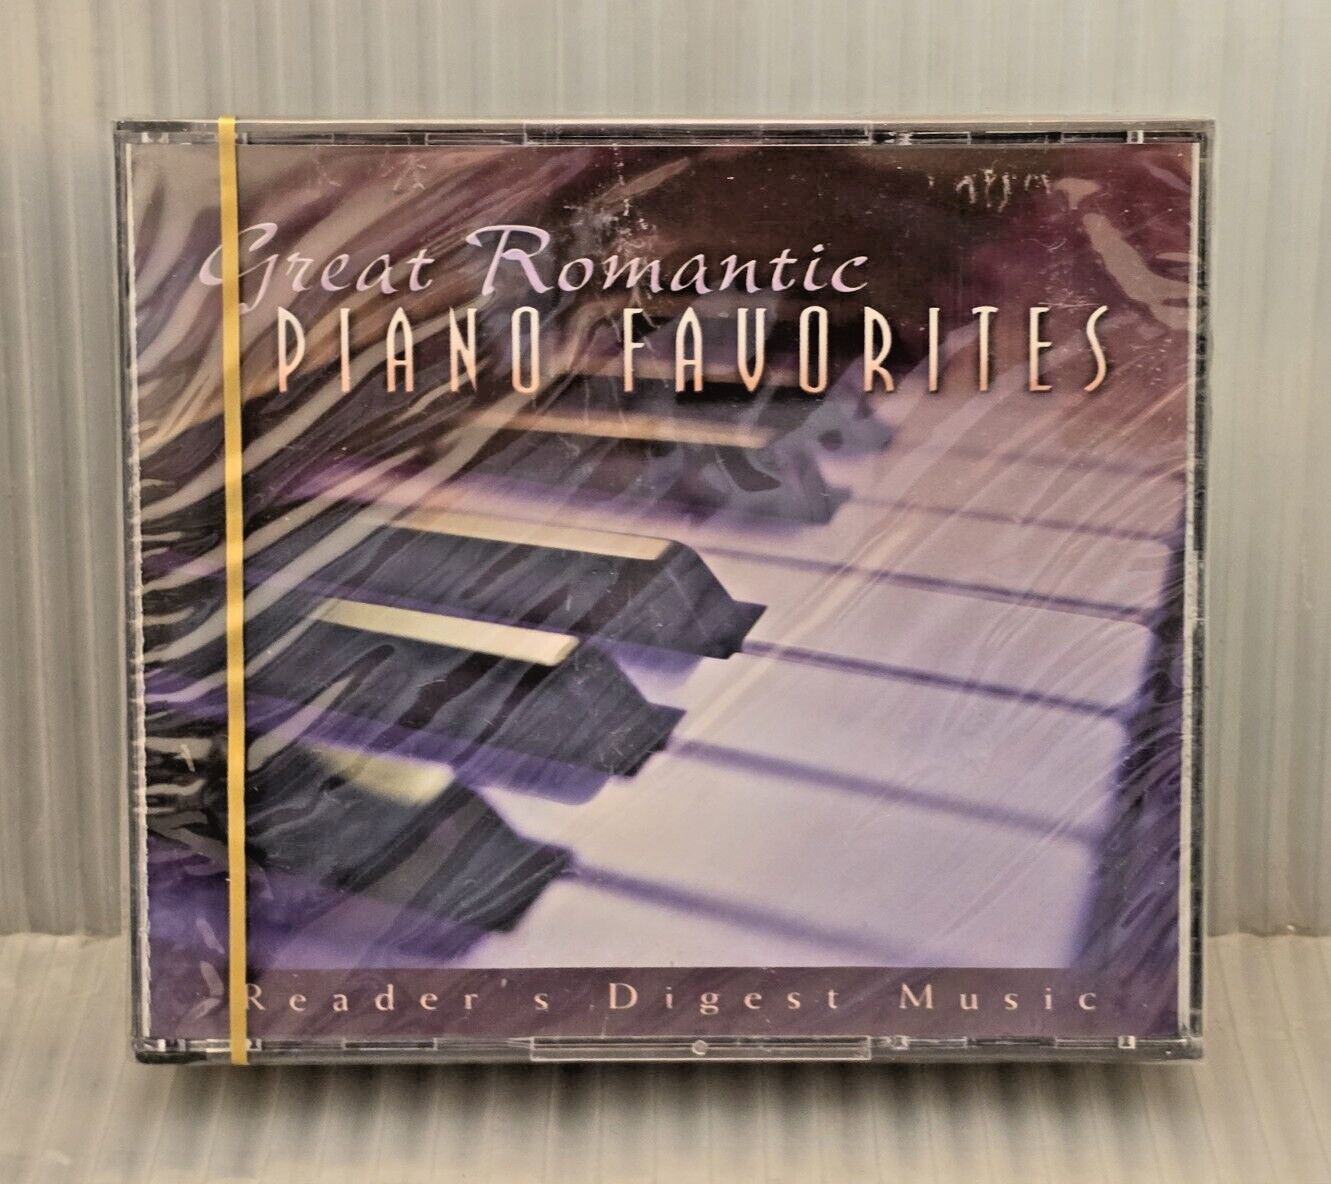 Readers Digest: Great Romantic Piano Favorites - 4 CD Set - SEALED